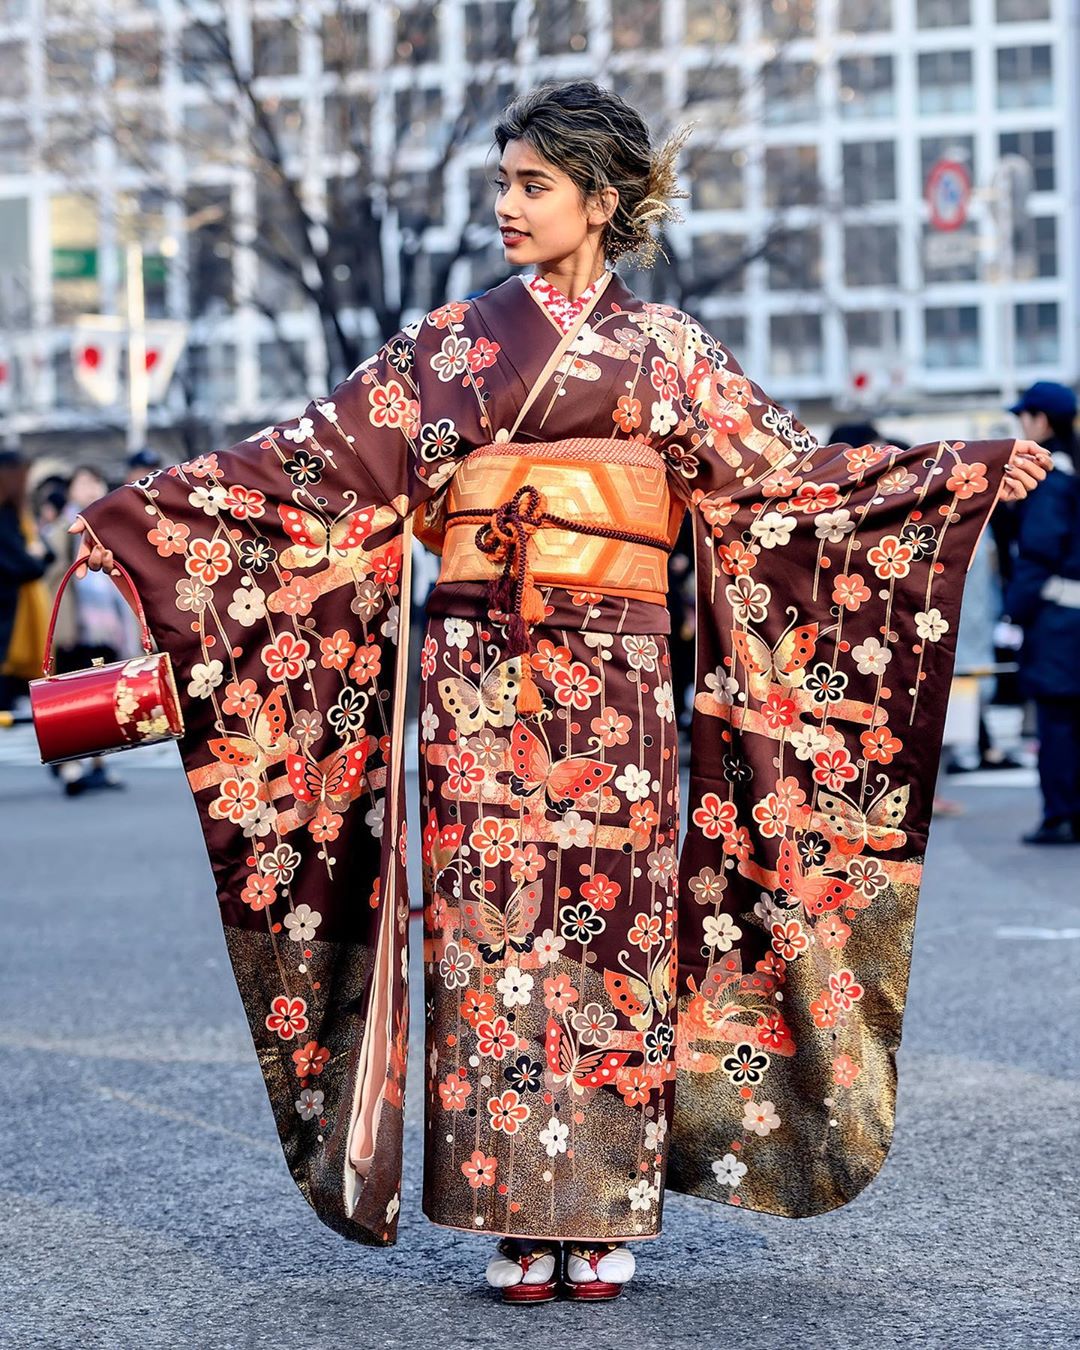 Tokyo Fashion Traditional Japanese furisode kimono on the